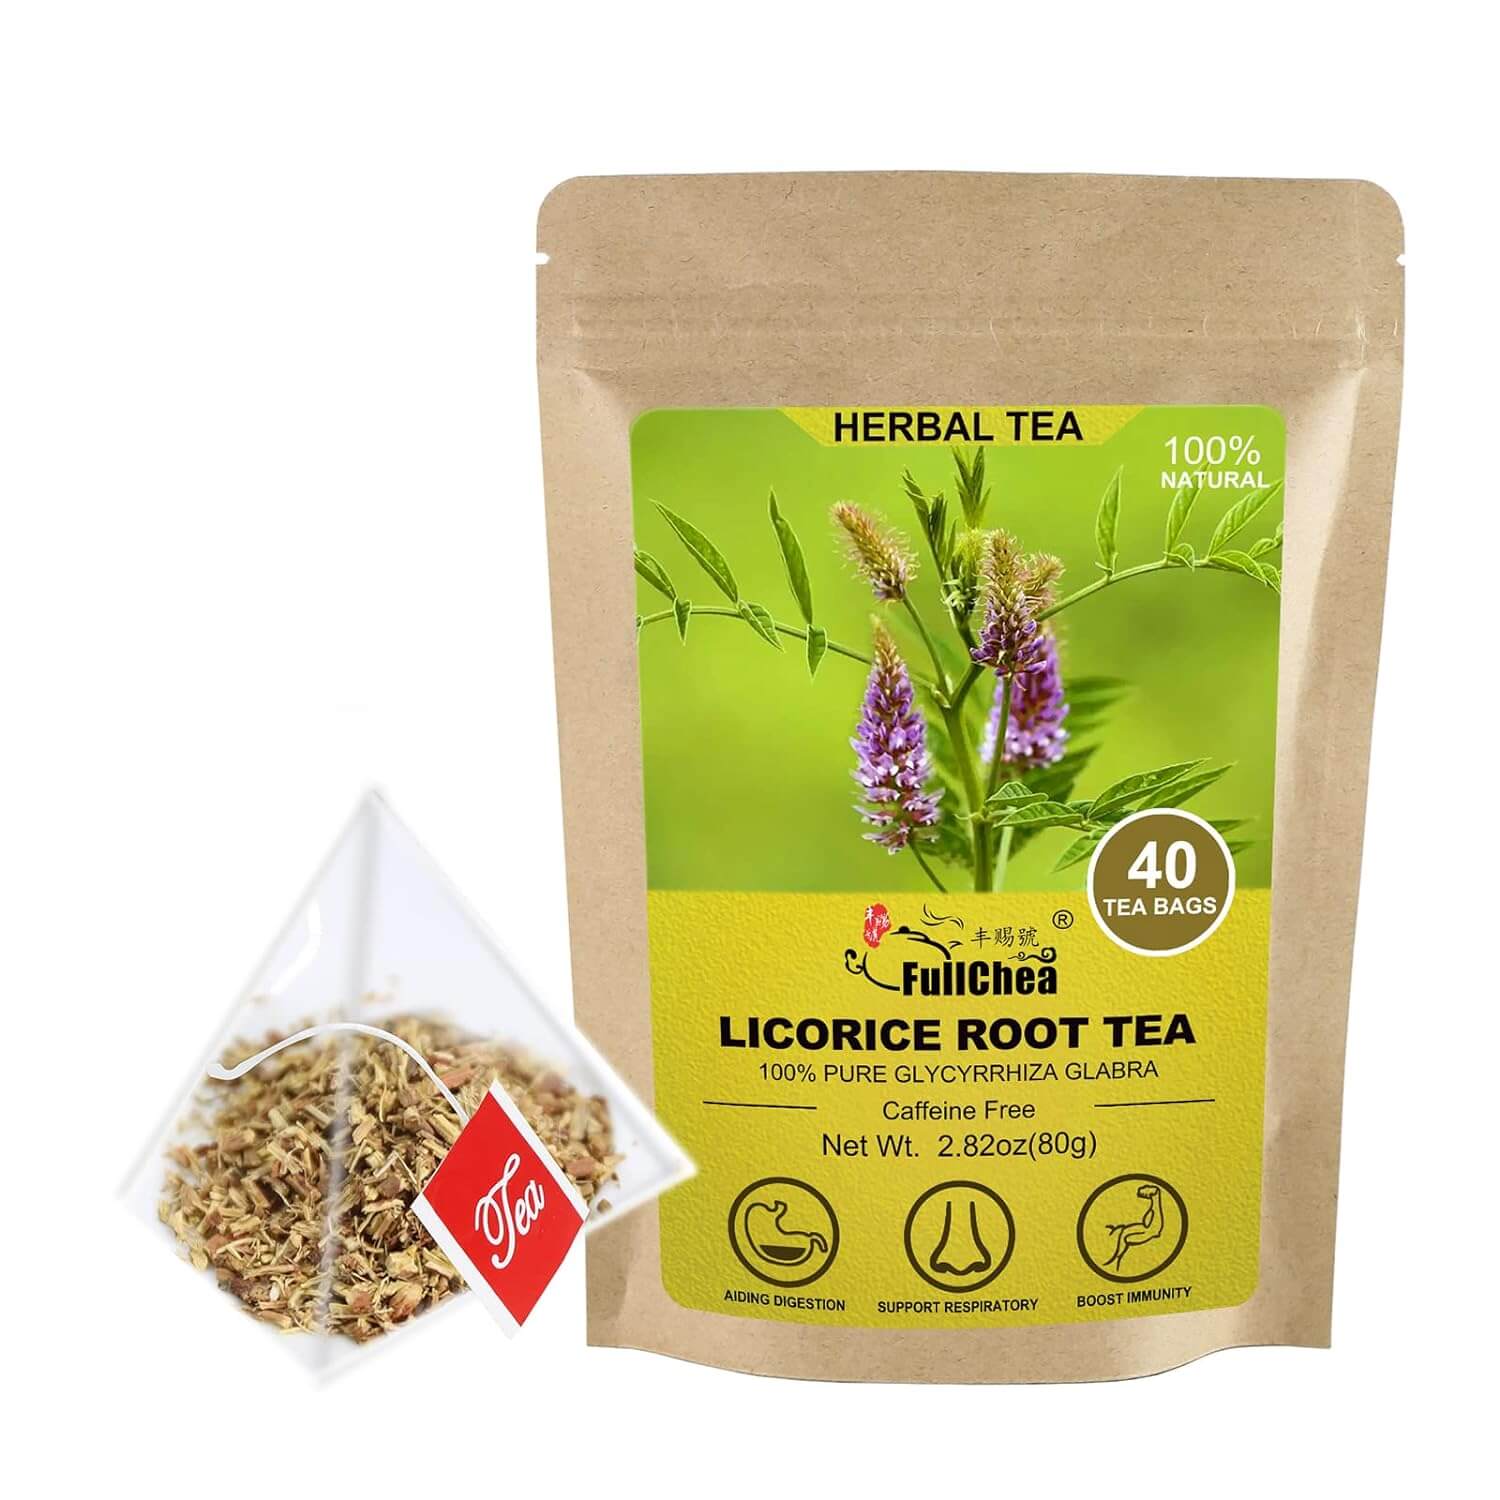 Amazon's overall pick: FullChea Licorice Root Tea